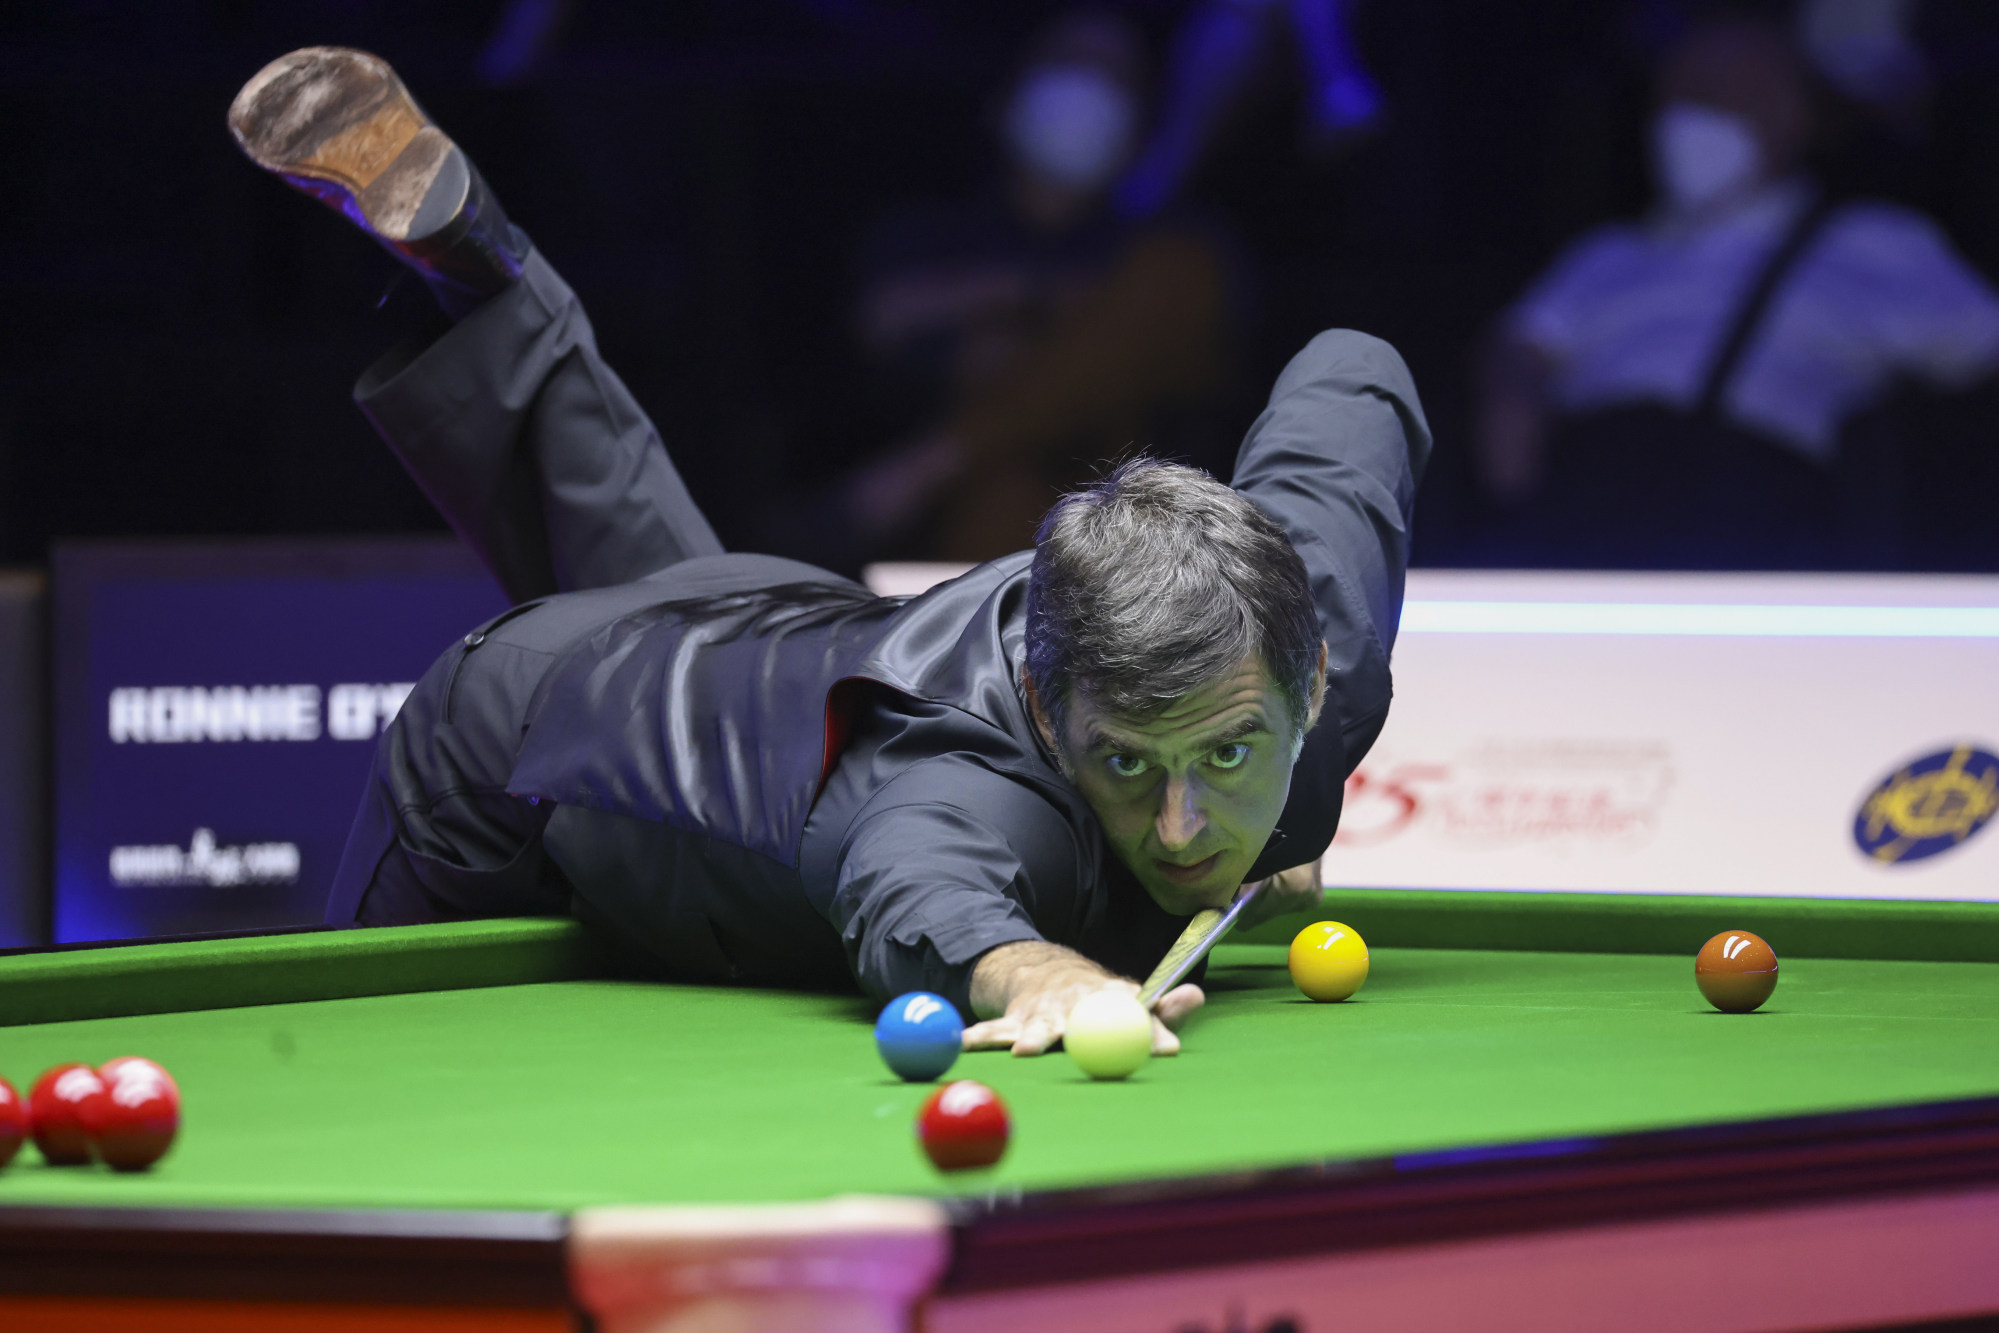 Snooker world champion Ronnie OSullivan feels an impostor despite cruising to last 16 of UK Championship South China Morning Post